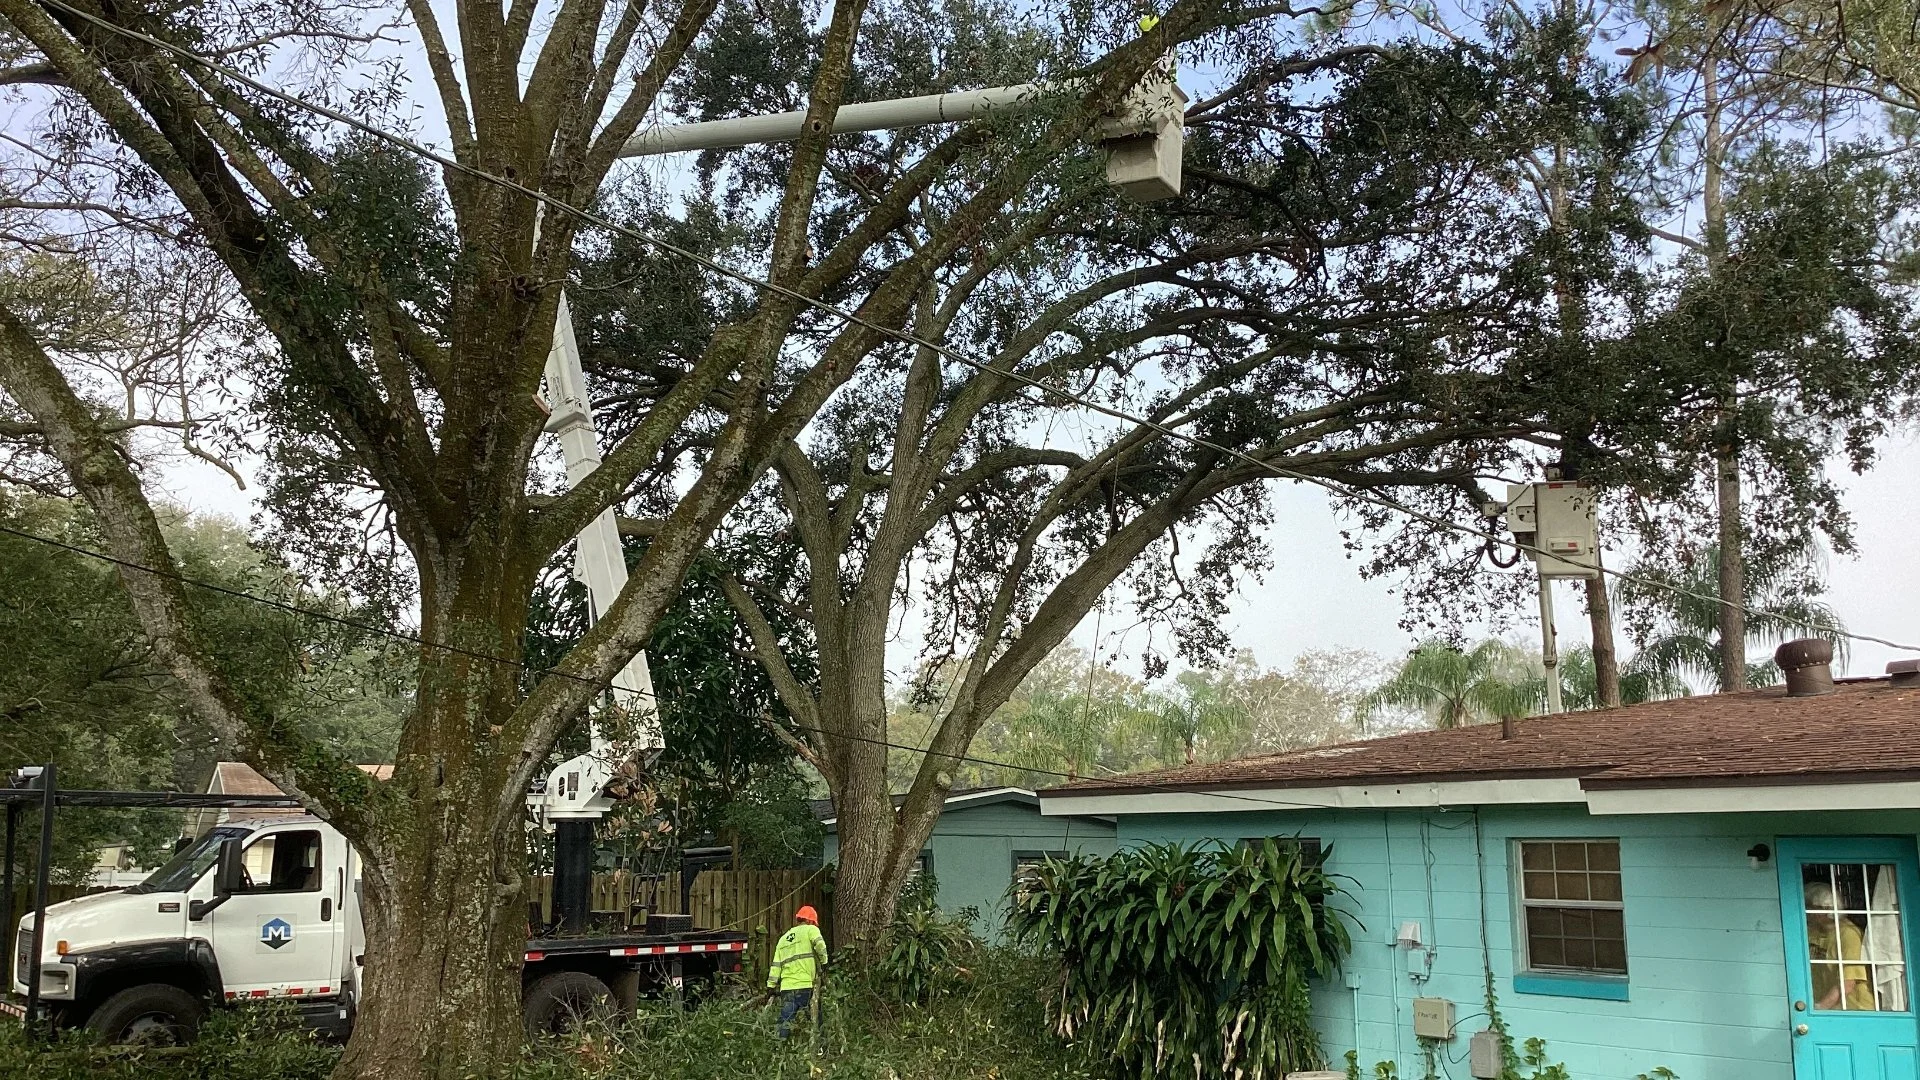 Technician Performing tree pruning serivce in Tampa, FL.